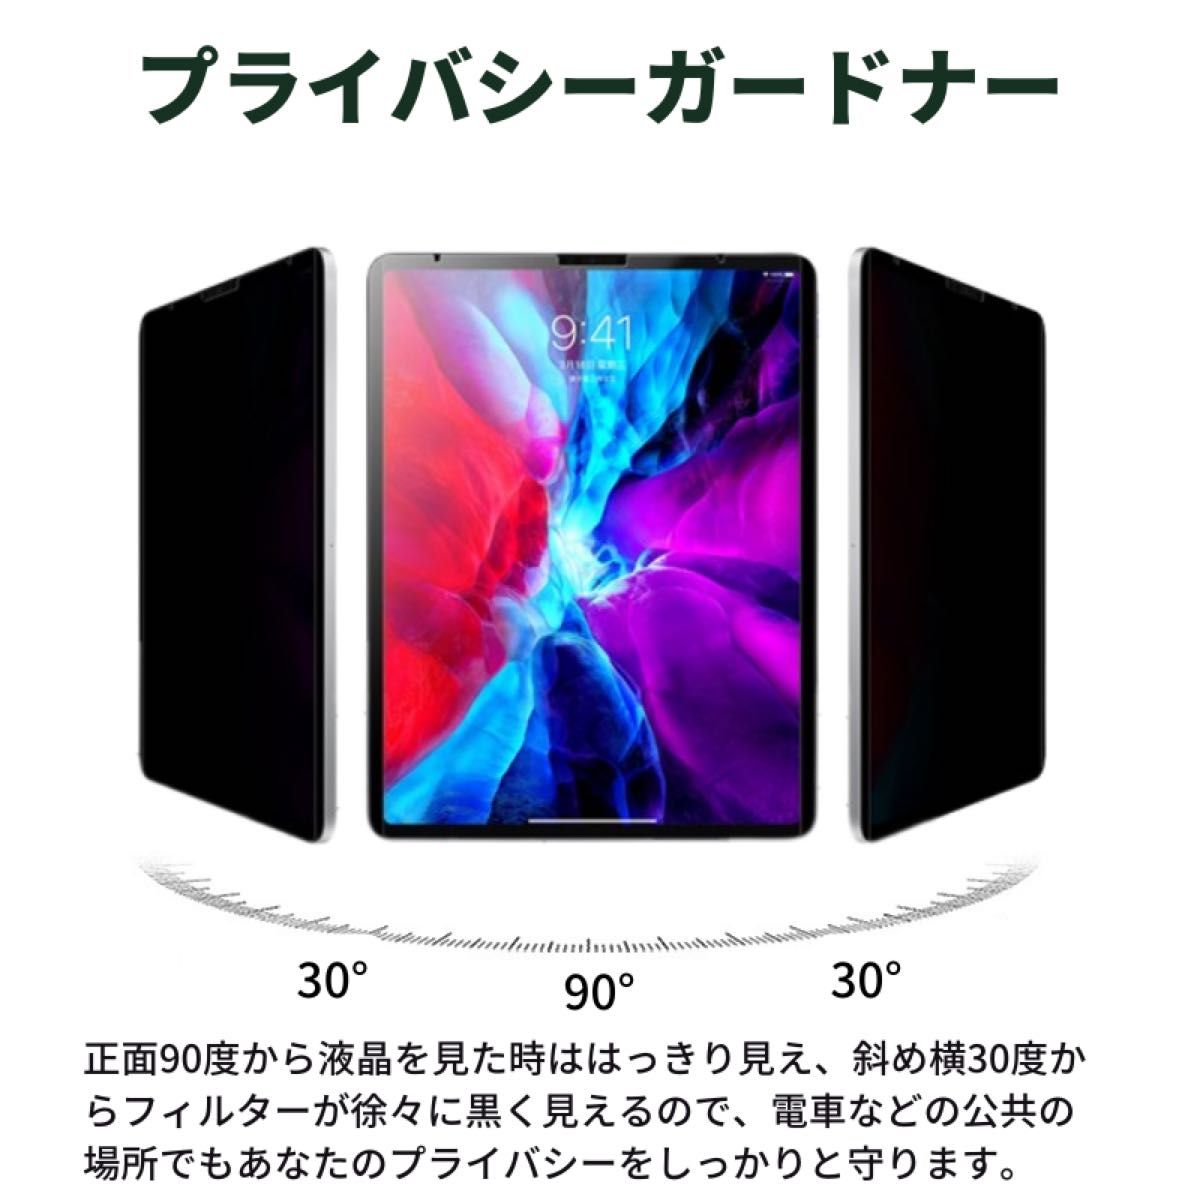 iPad Air4 Air5 覗き見防止 強化ガラス フィルム ガラスフィルム 保護フィルム タブレット のぞき見 Air 4 5